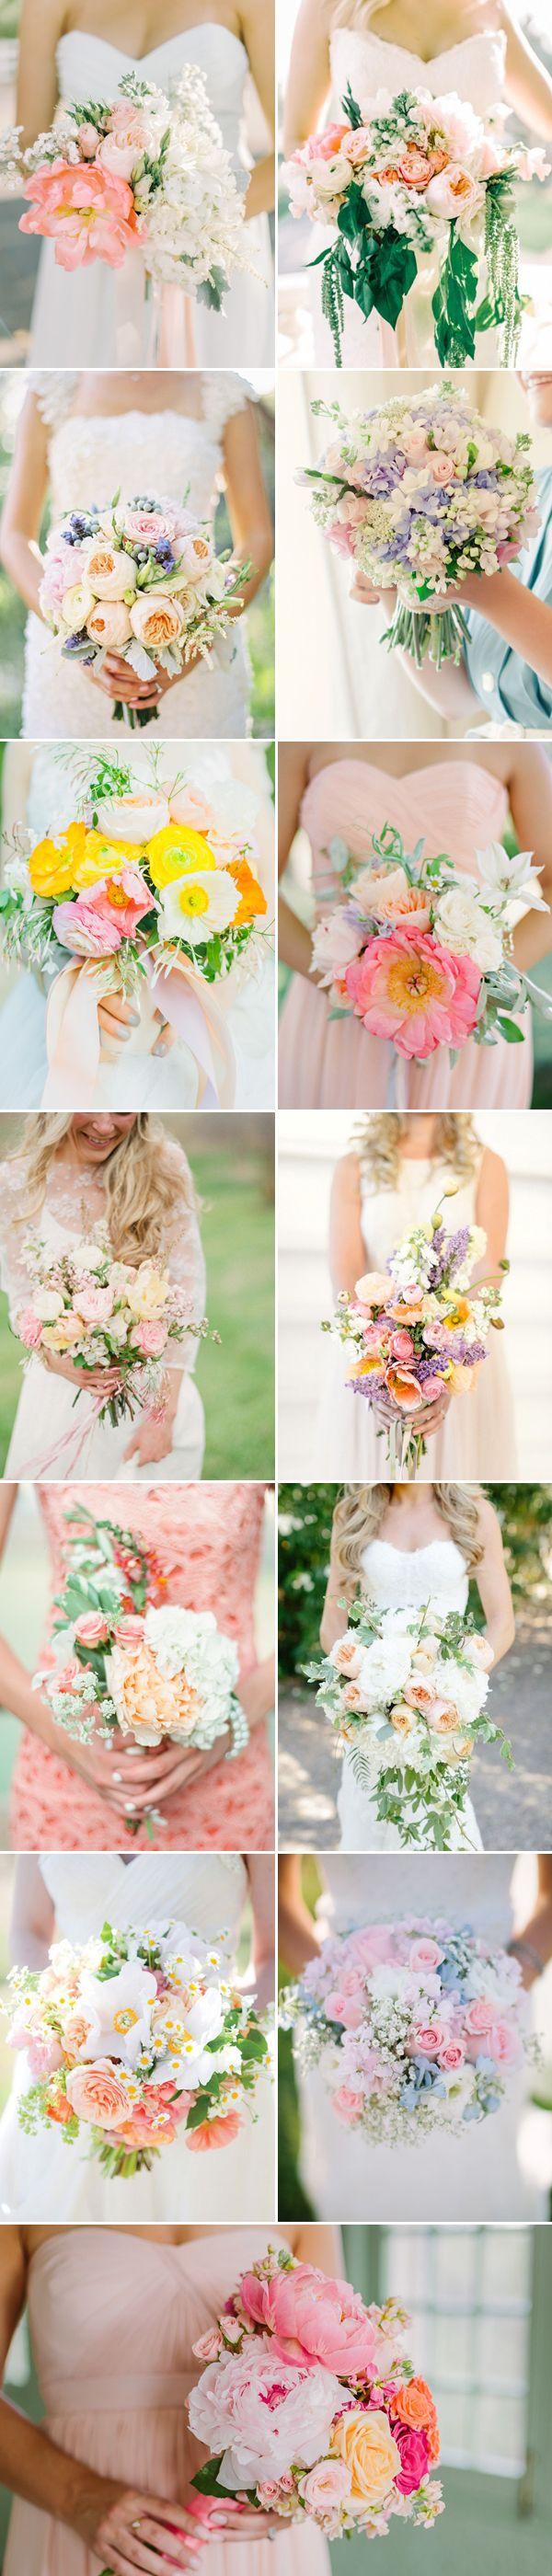 زفاف - 72 Gorgeous Ideas For Wedding Bouquets